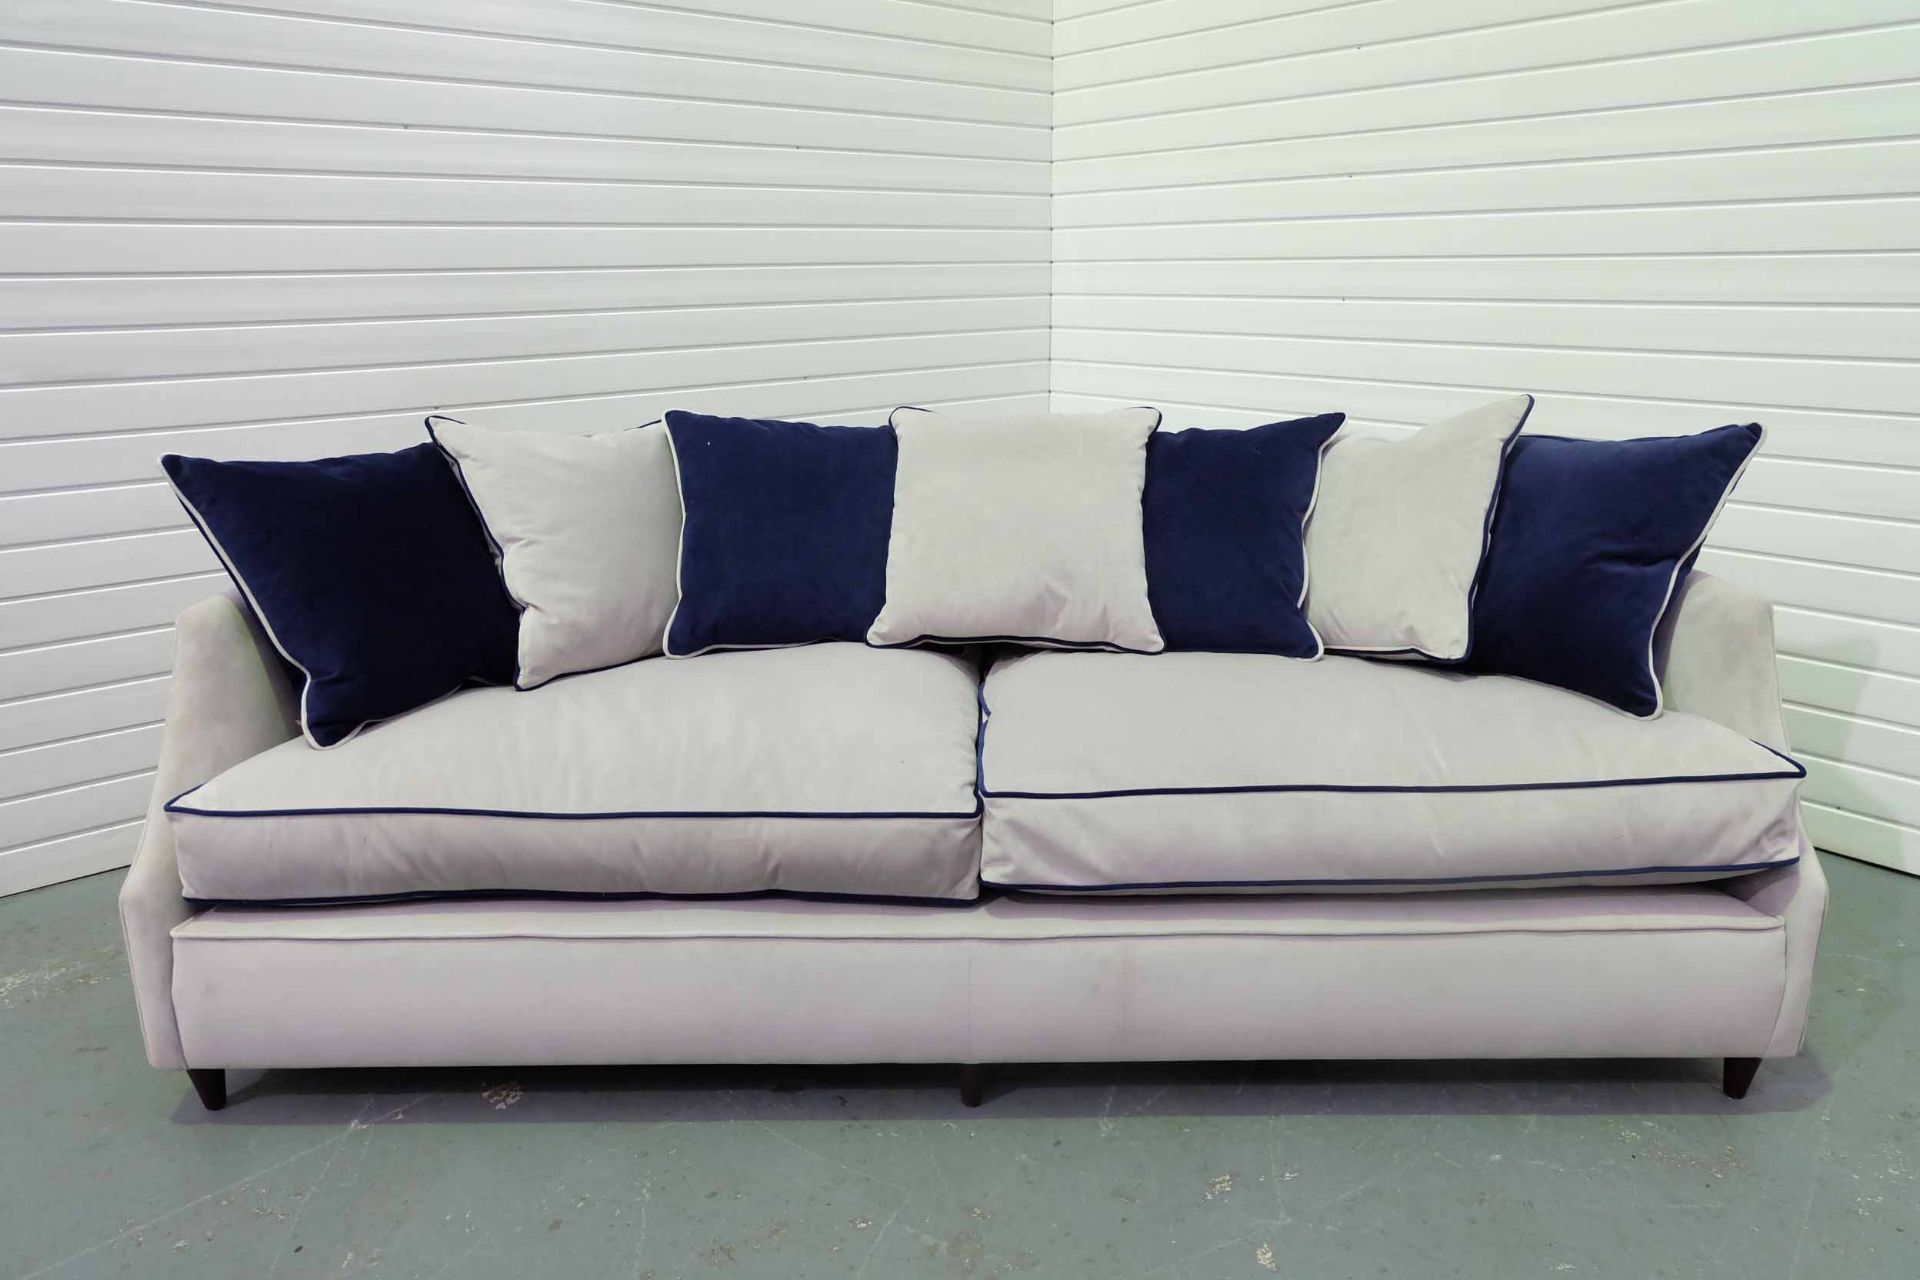 Steed Upholstery 'Hockley' Range Fully Handmade Scatter Back Snuggler Sofa. Includes 7 Scatter Cushi